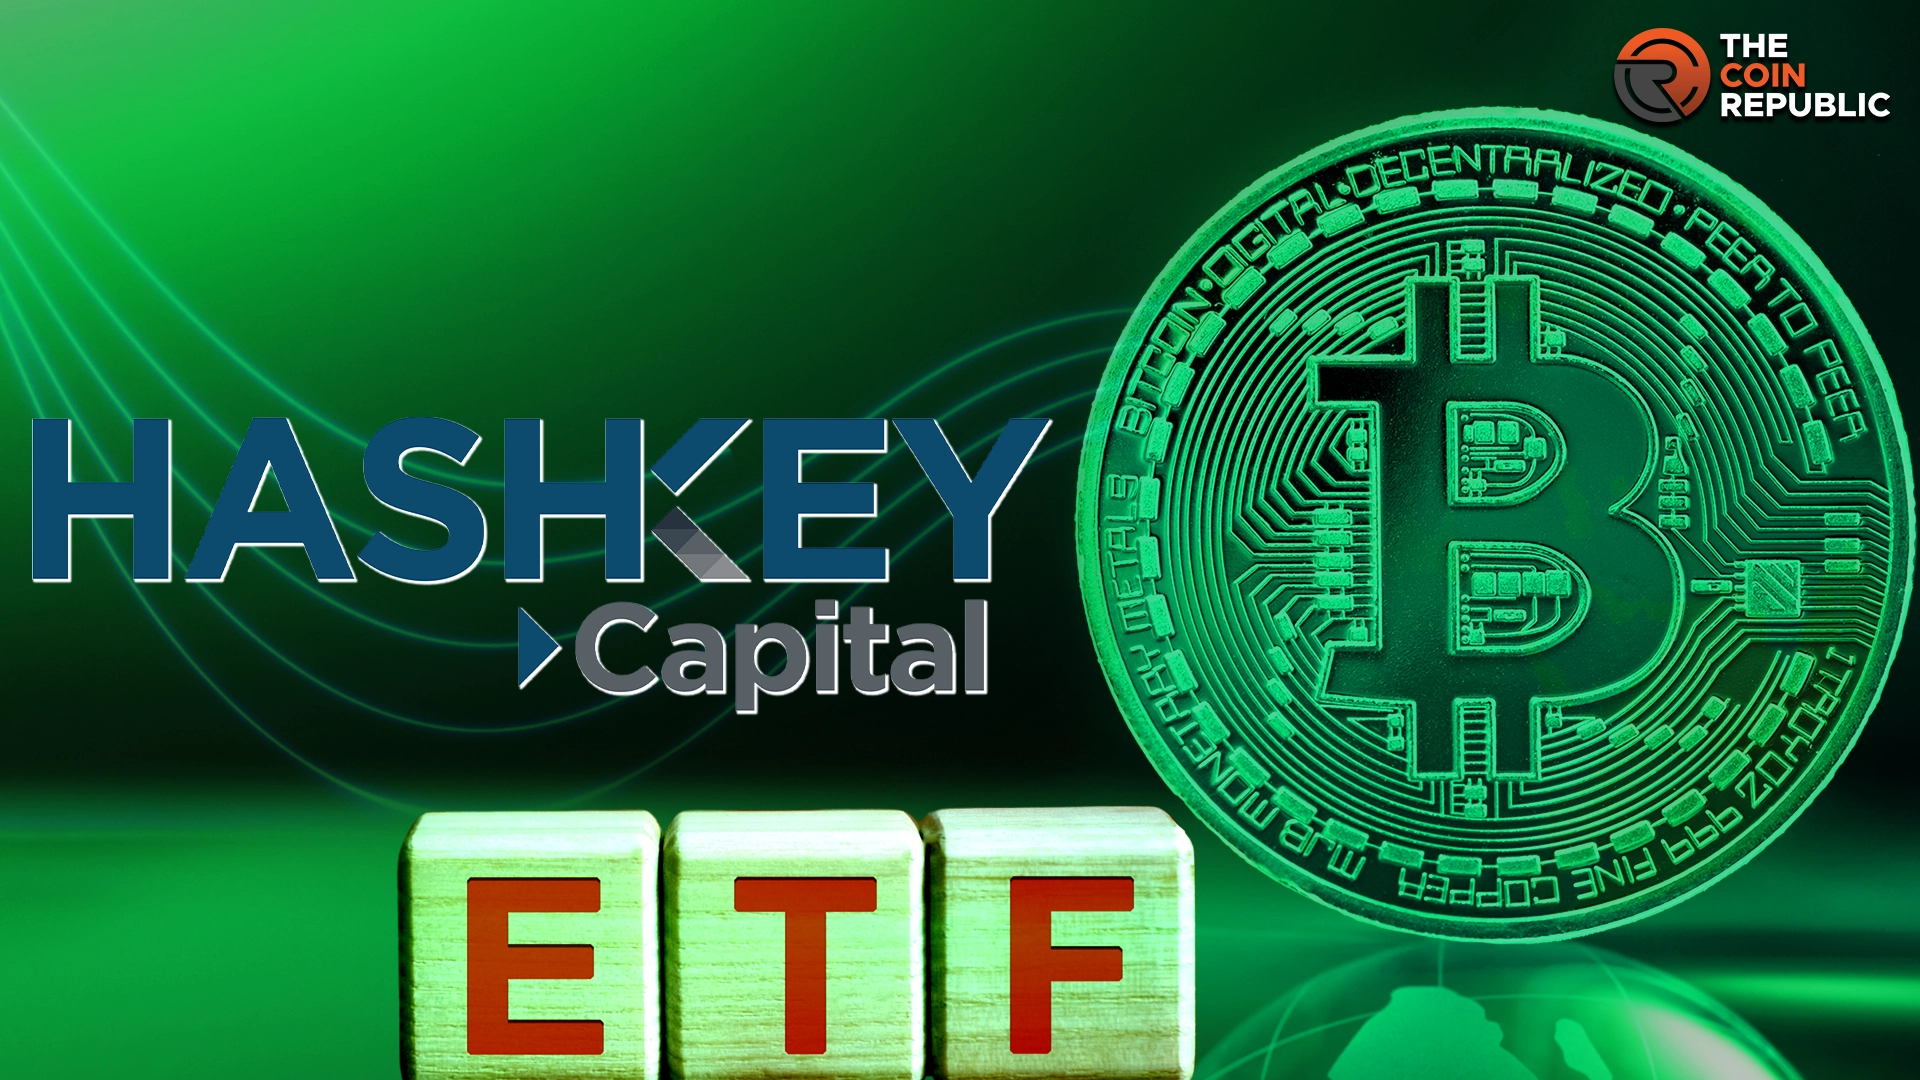 Green Crypto ETFs Ready To Give The Market a New Look? Here’s Hashkey Capital’s Take